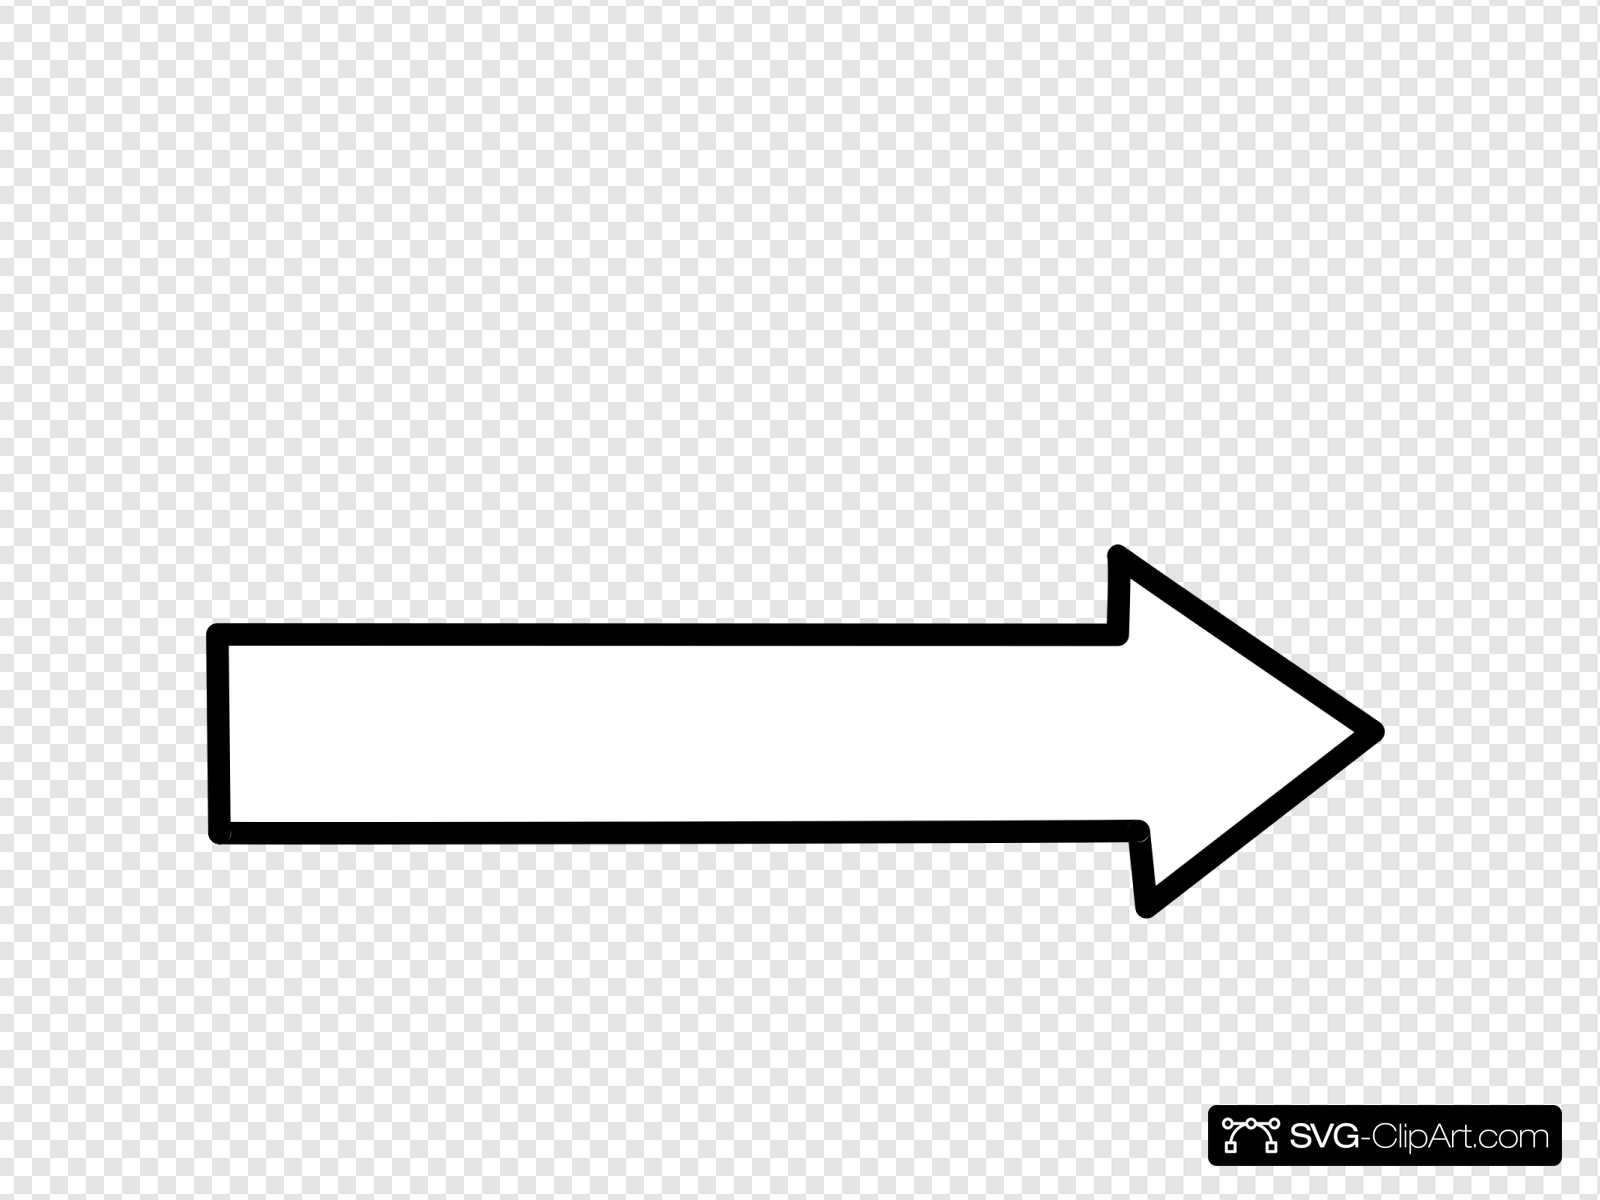 Right Arrow Clip art, Icon and SVG.